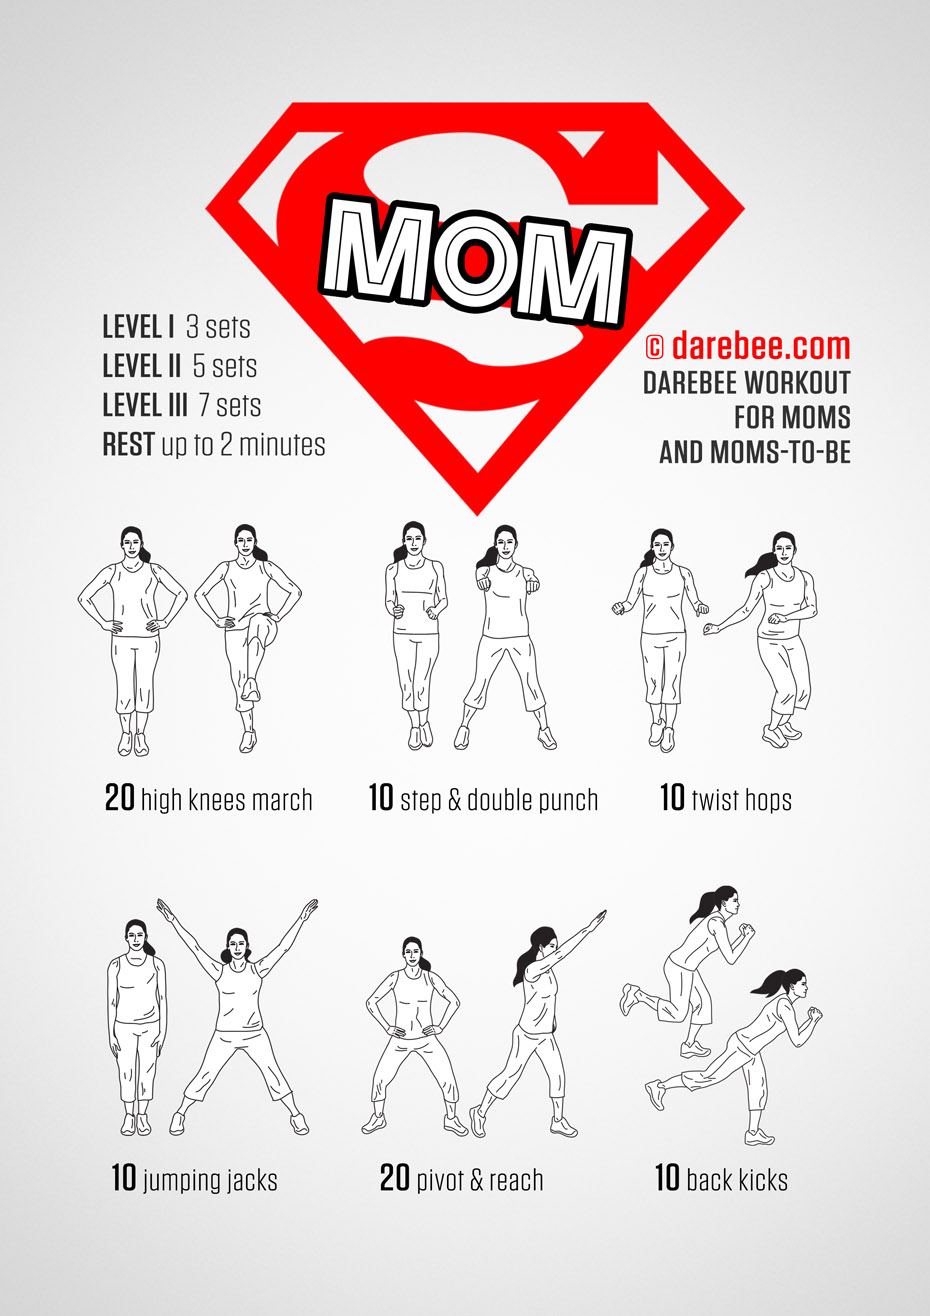 Moms workout